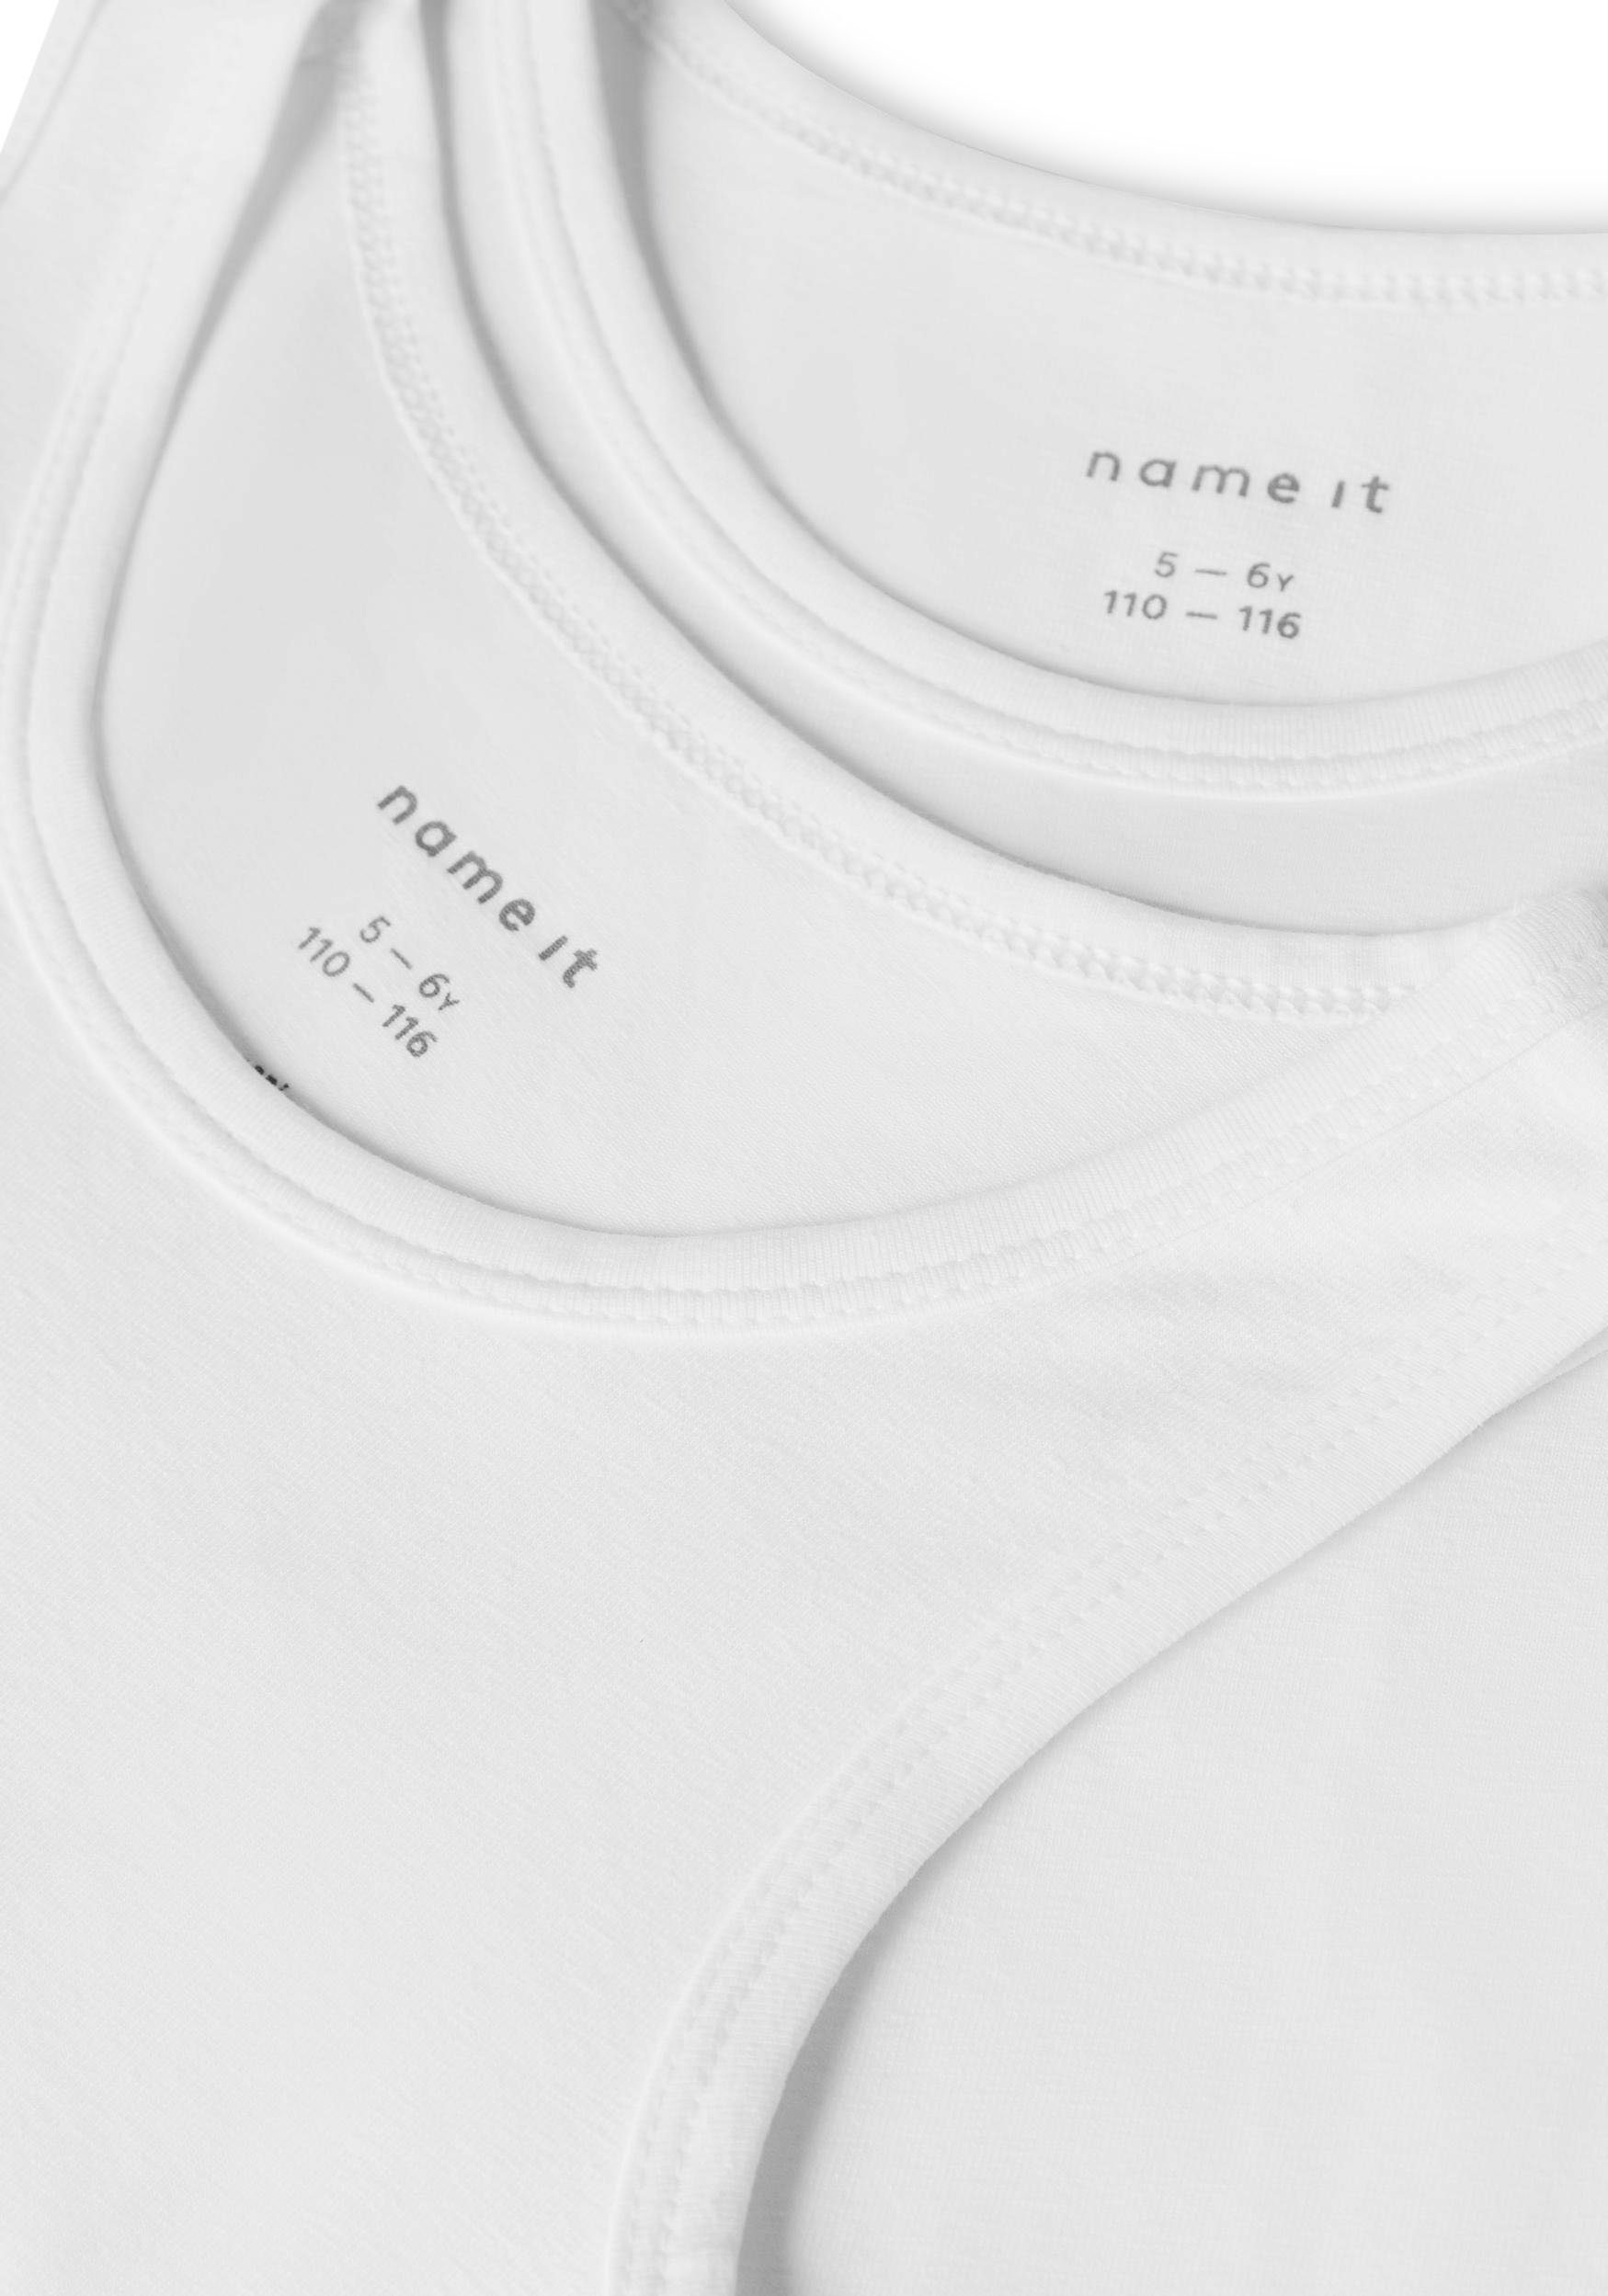 TOP Name 2-St) It white (Packung, NKMTANK 2P bright Unterhemd